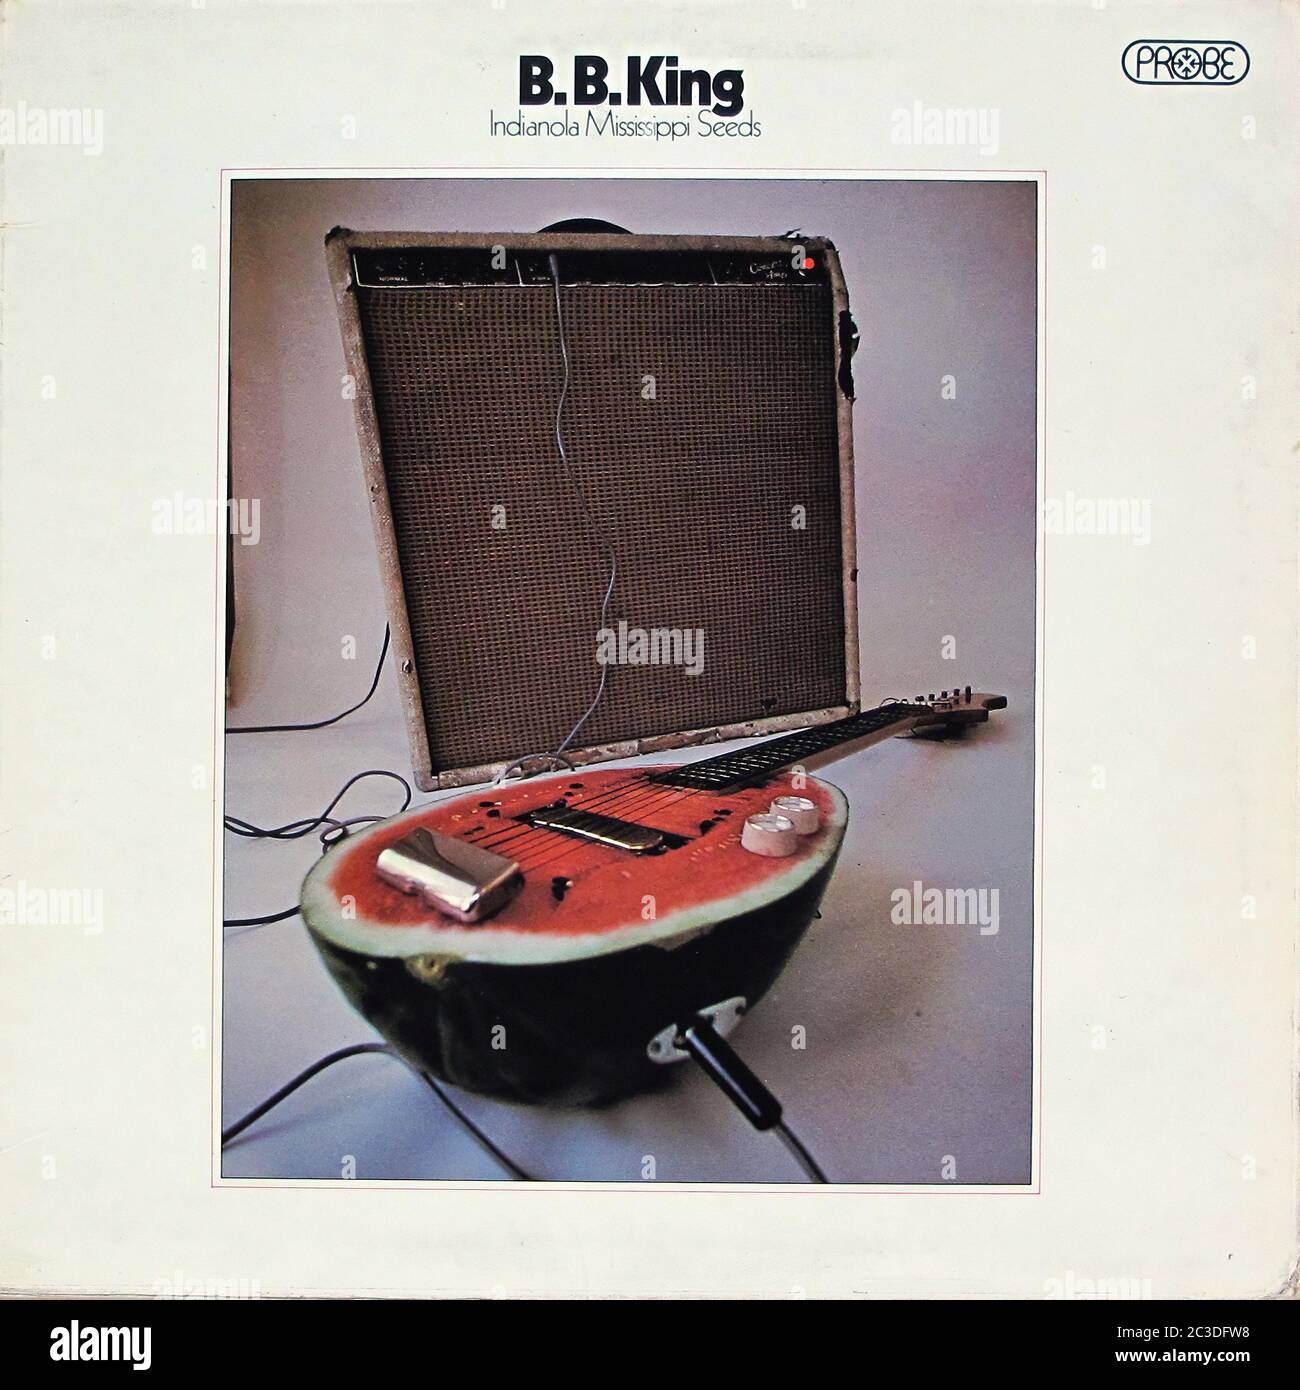 B. B. B. KING INDIANOLA MISSISSIPPI SEEDS - Vintage 12'' LP Vinyl Cover Stockfoto